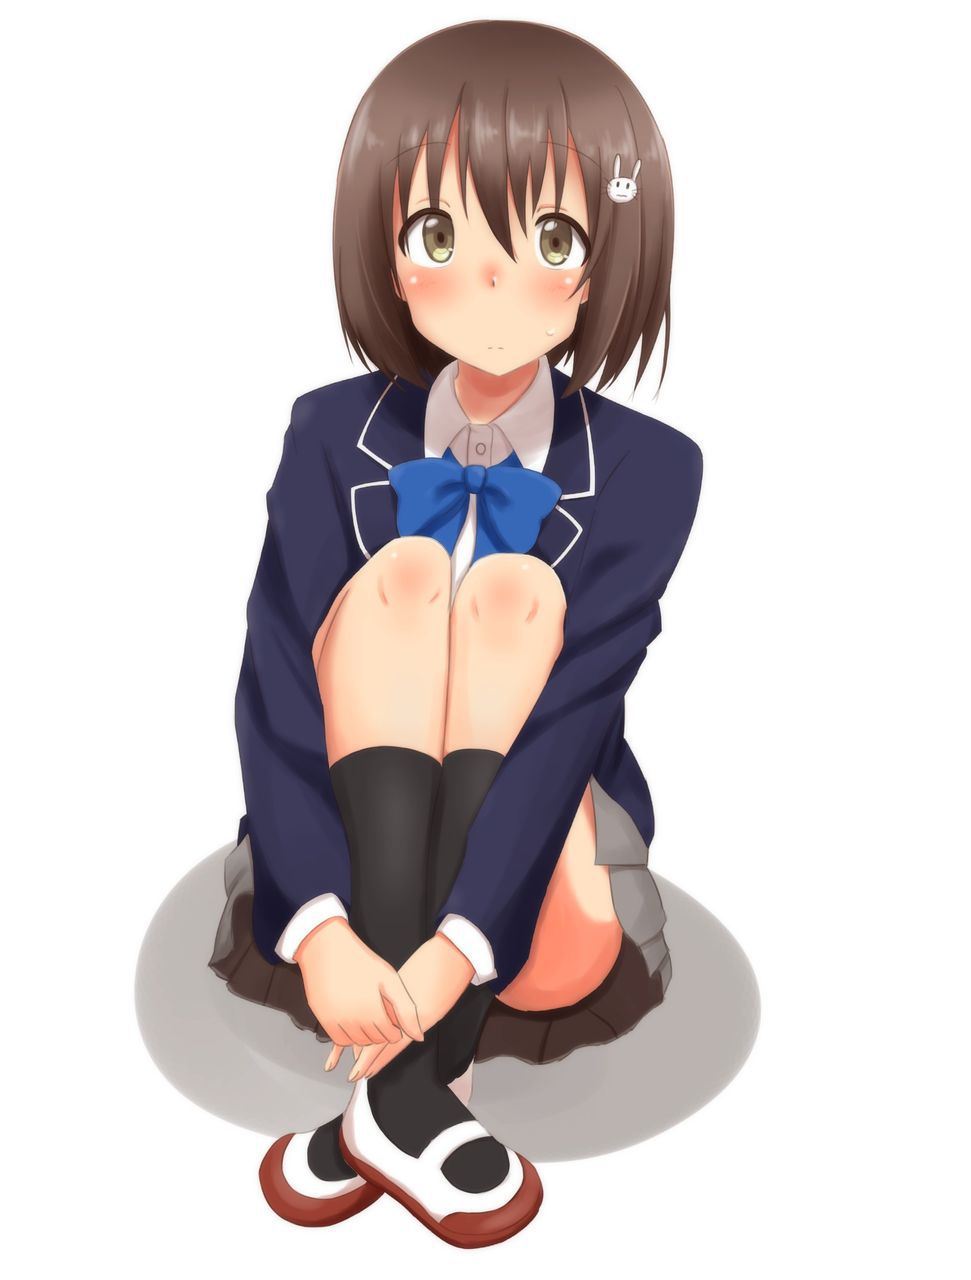 Secondary image of a cute girl in uniform part 29 [Uniform, non-erotic] 3